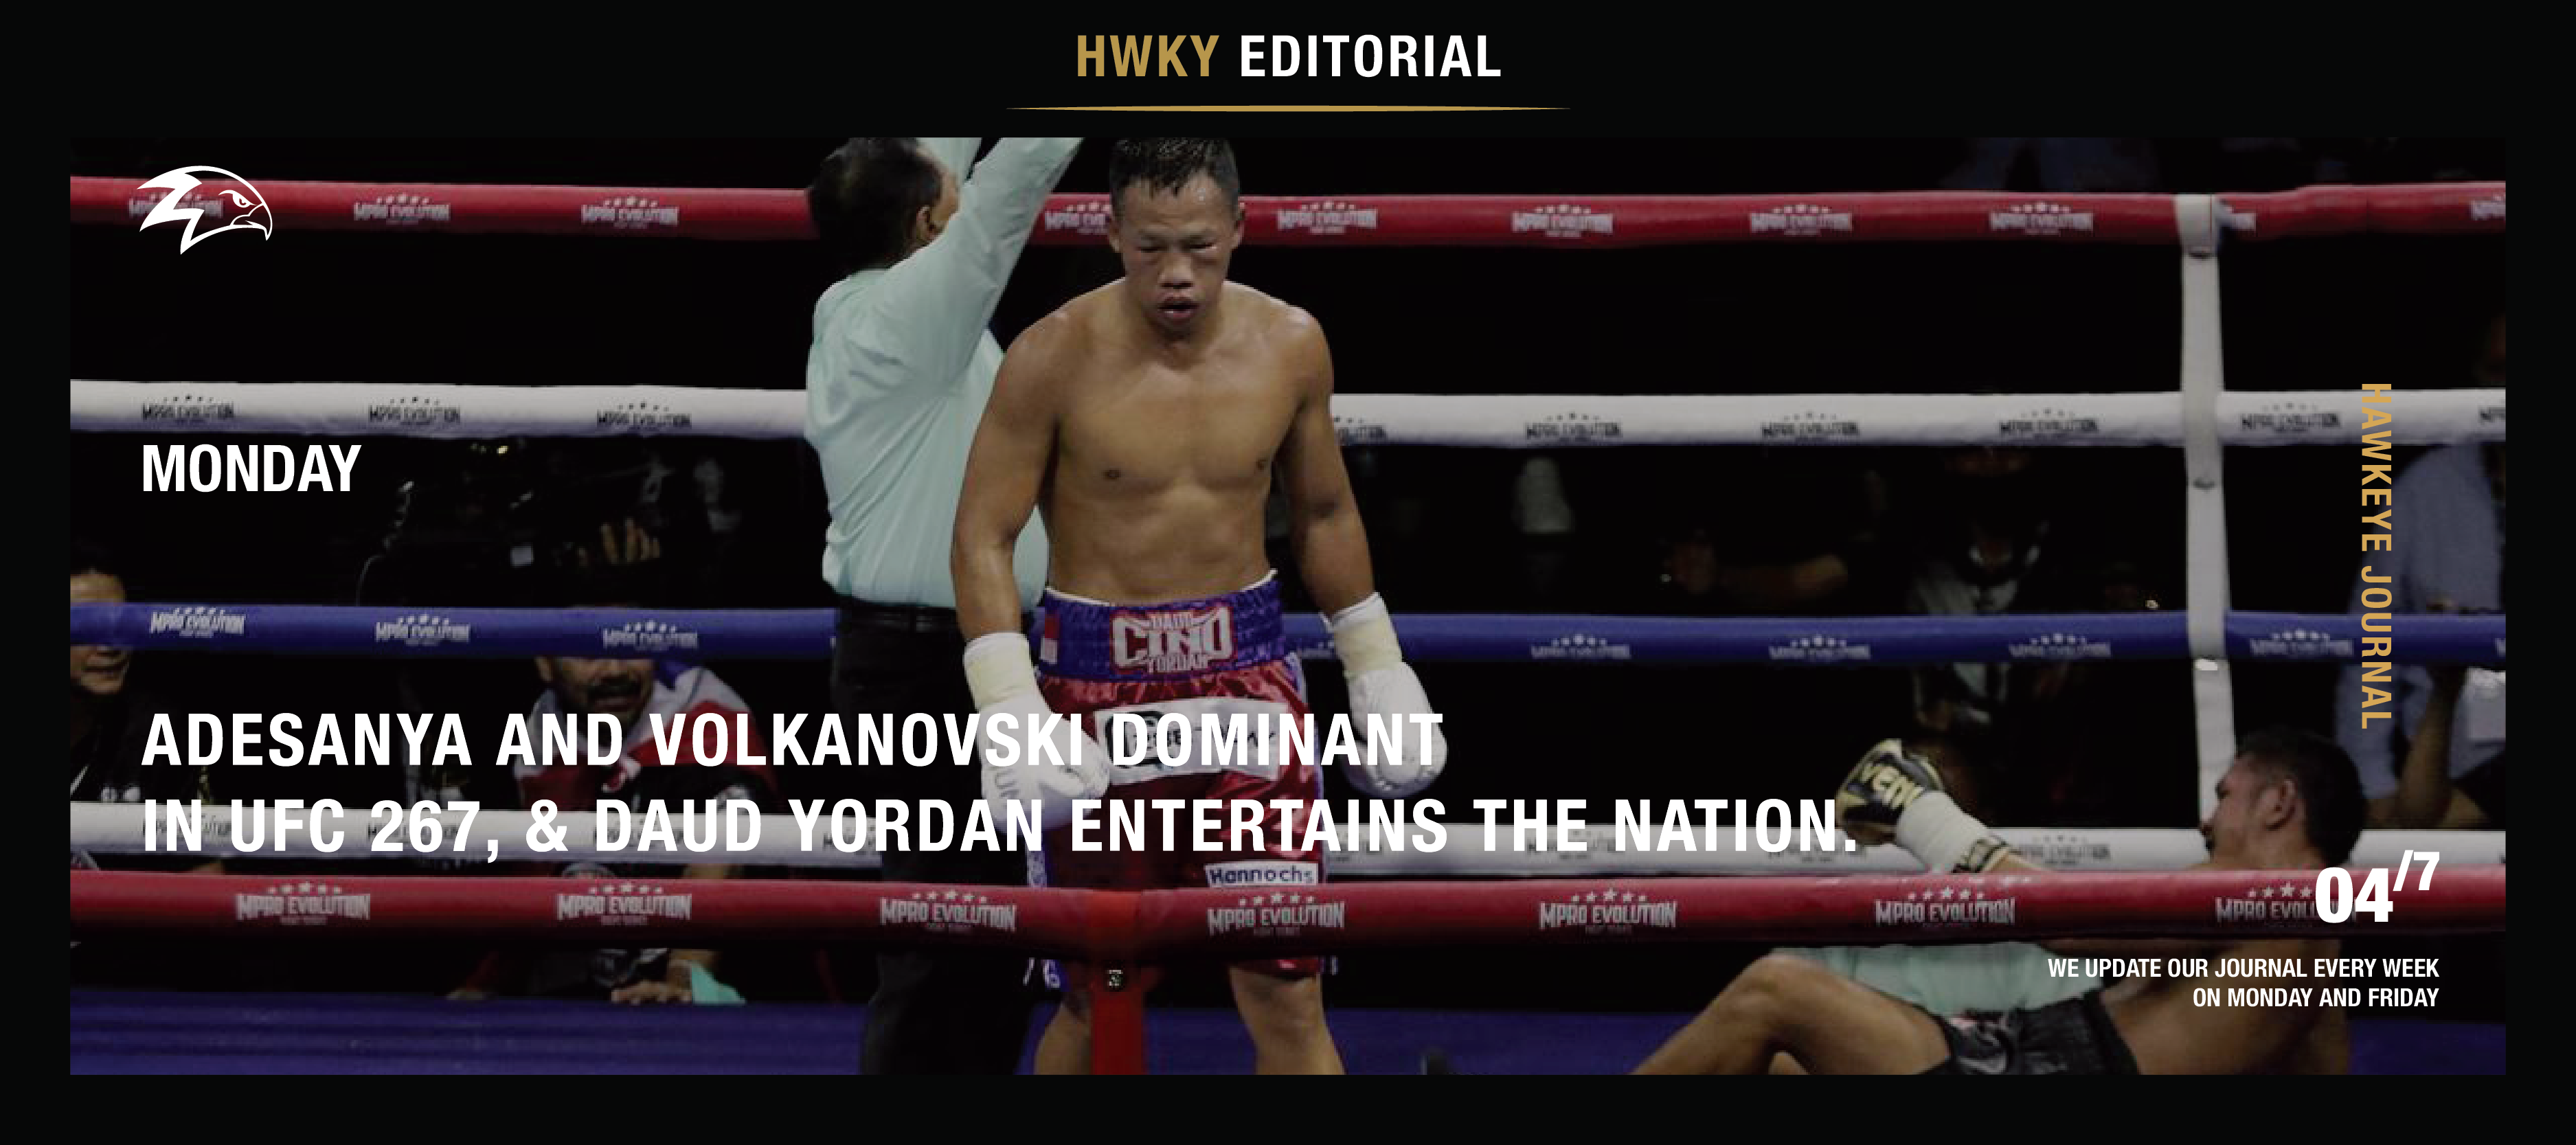 Adesanya And Volkanovski Dominant in UFC 267, & Daud Yordan Entertains The Nation.